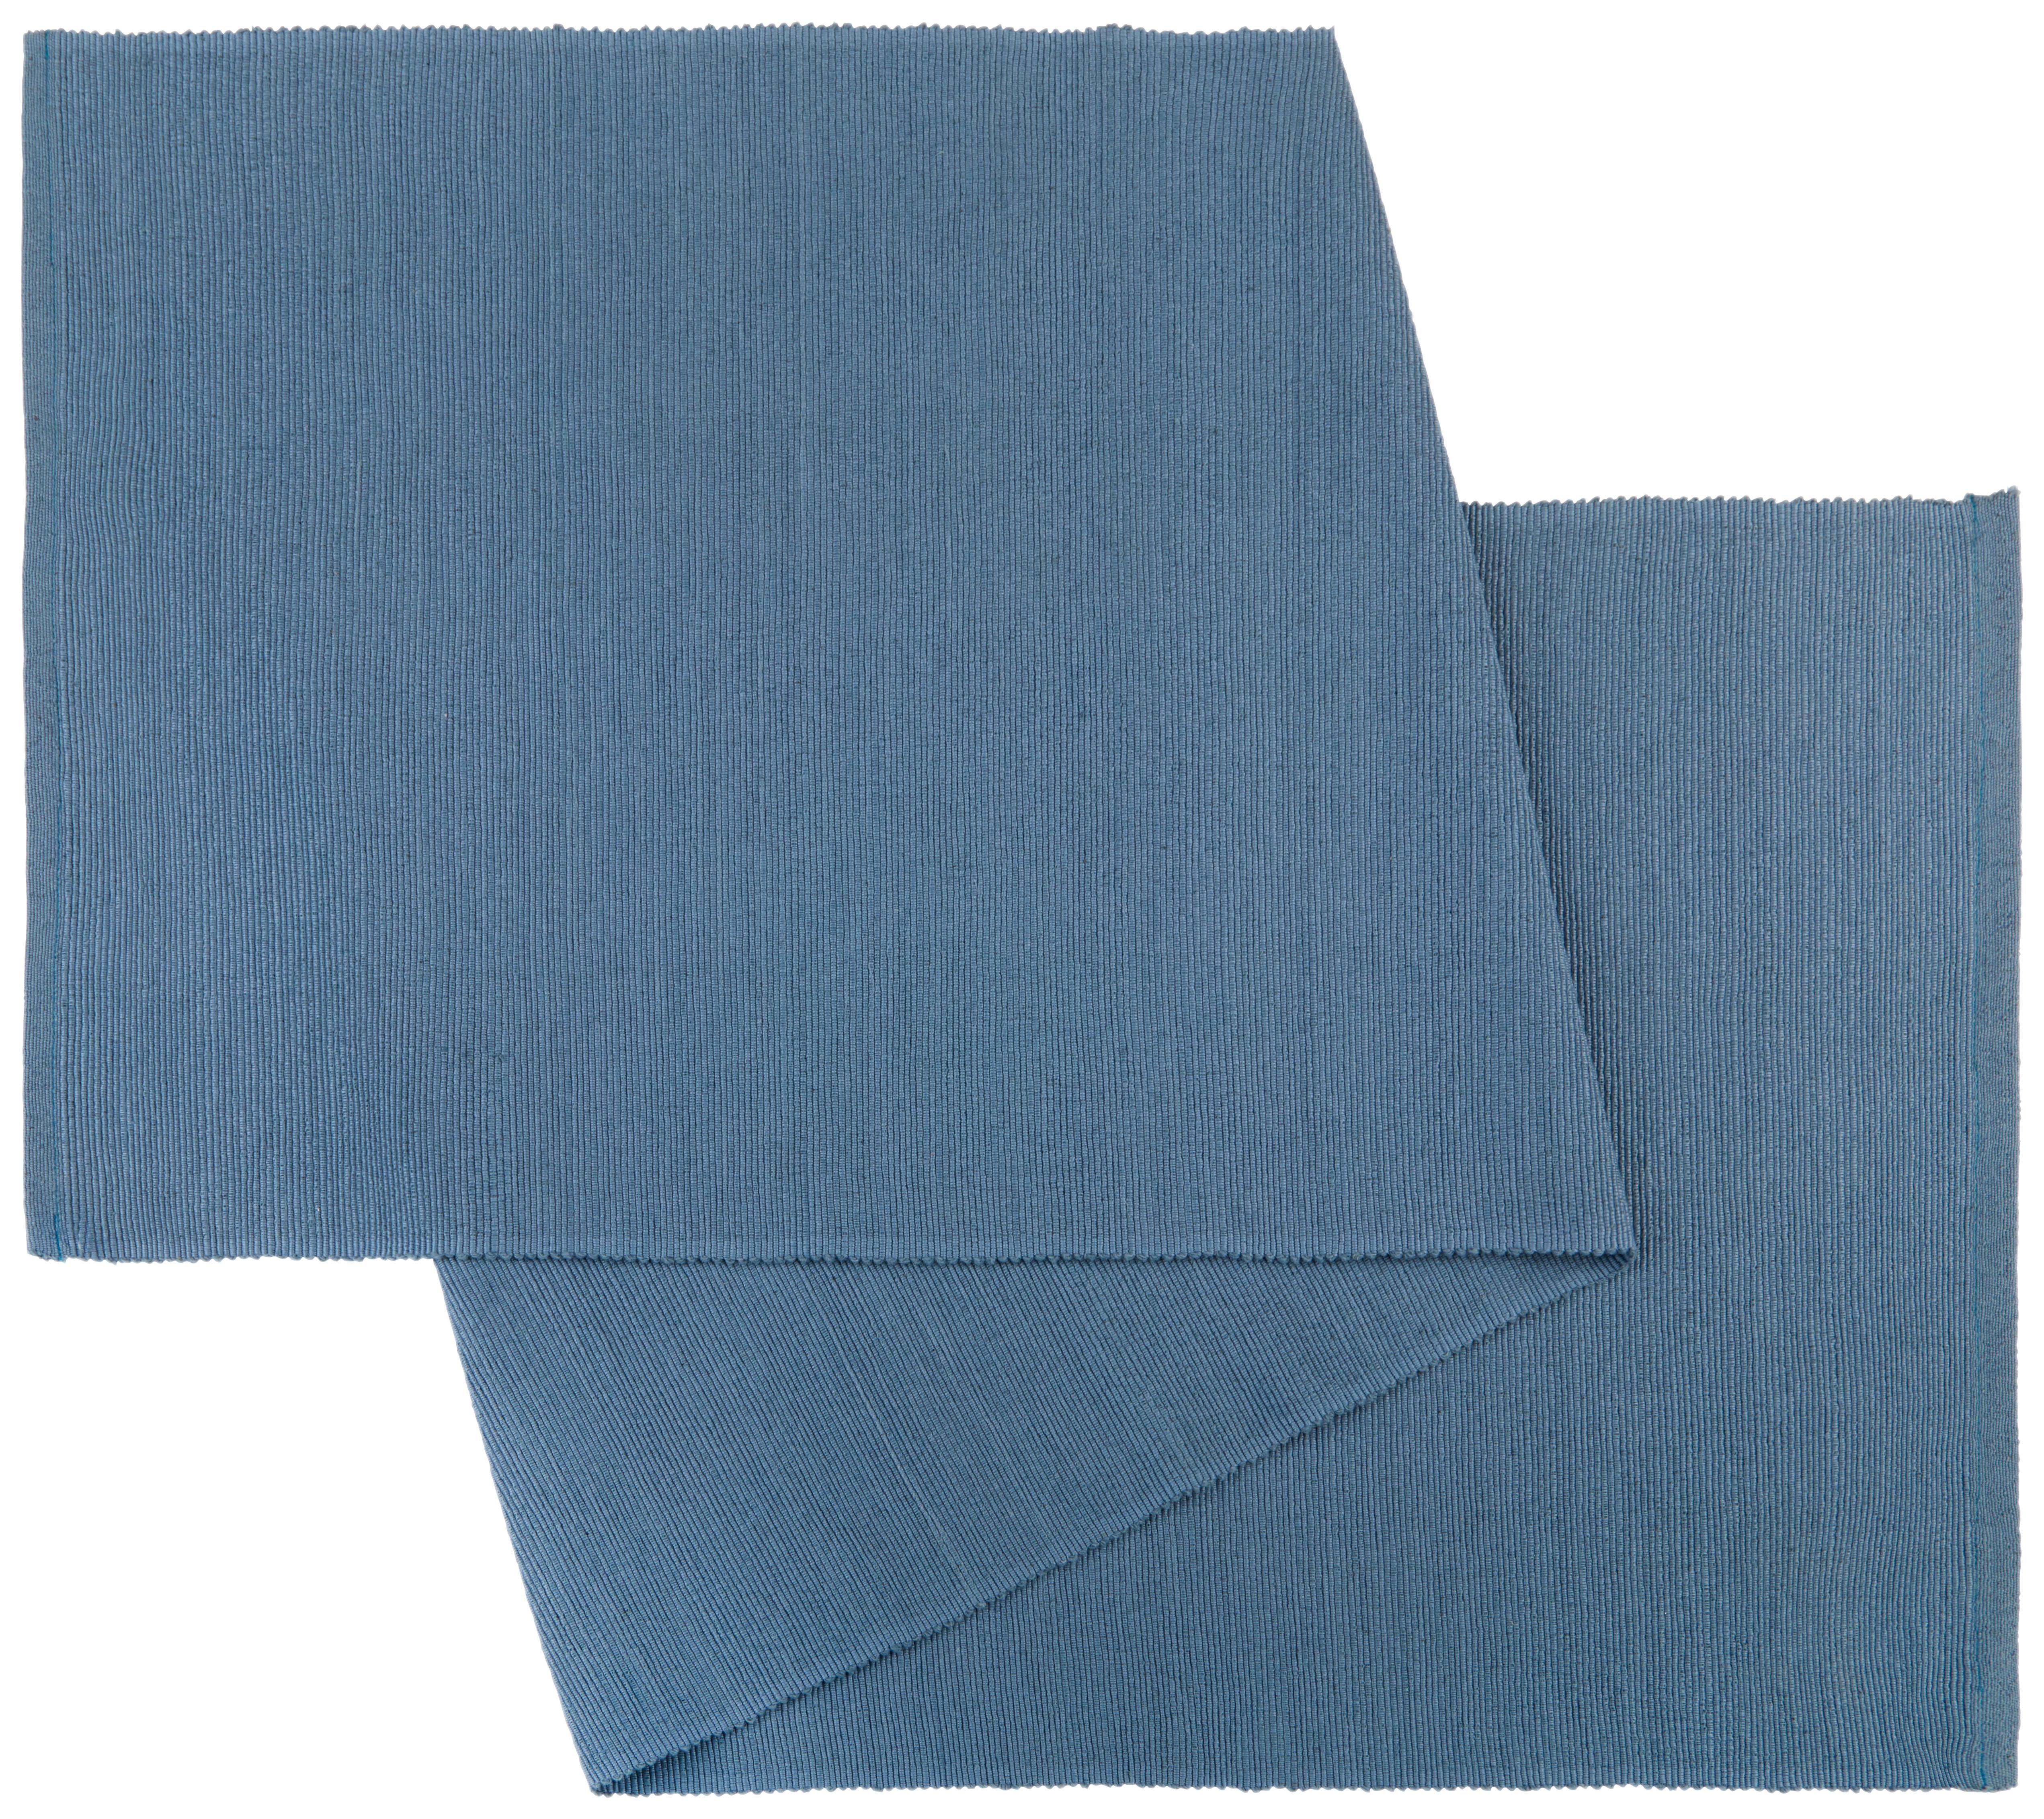 Nadstolnjak Maren - plava, tekstil (40/150cm) - Modern Living